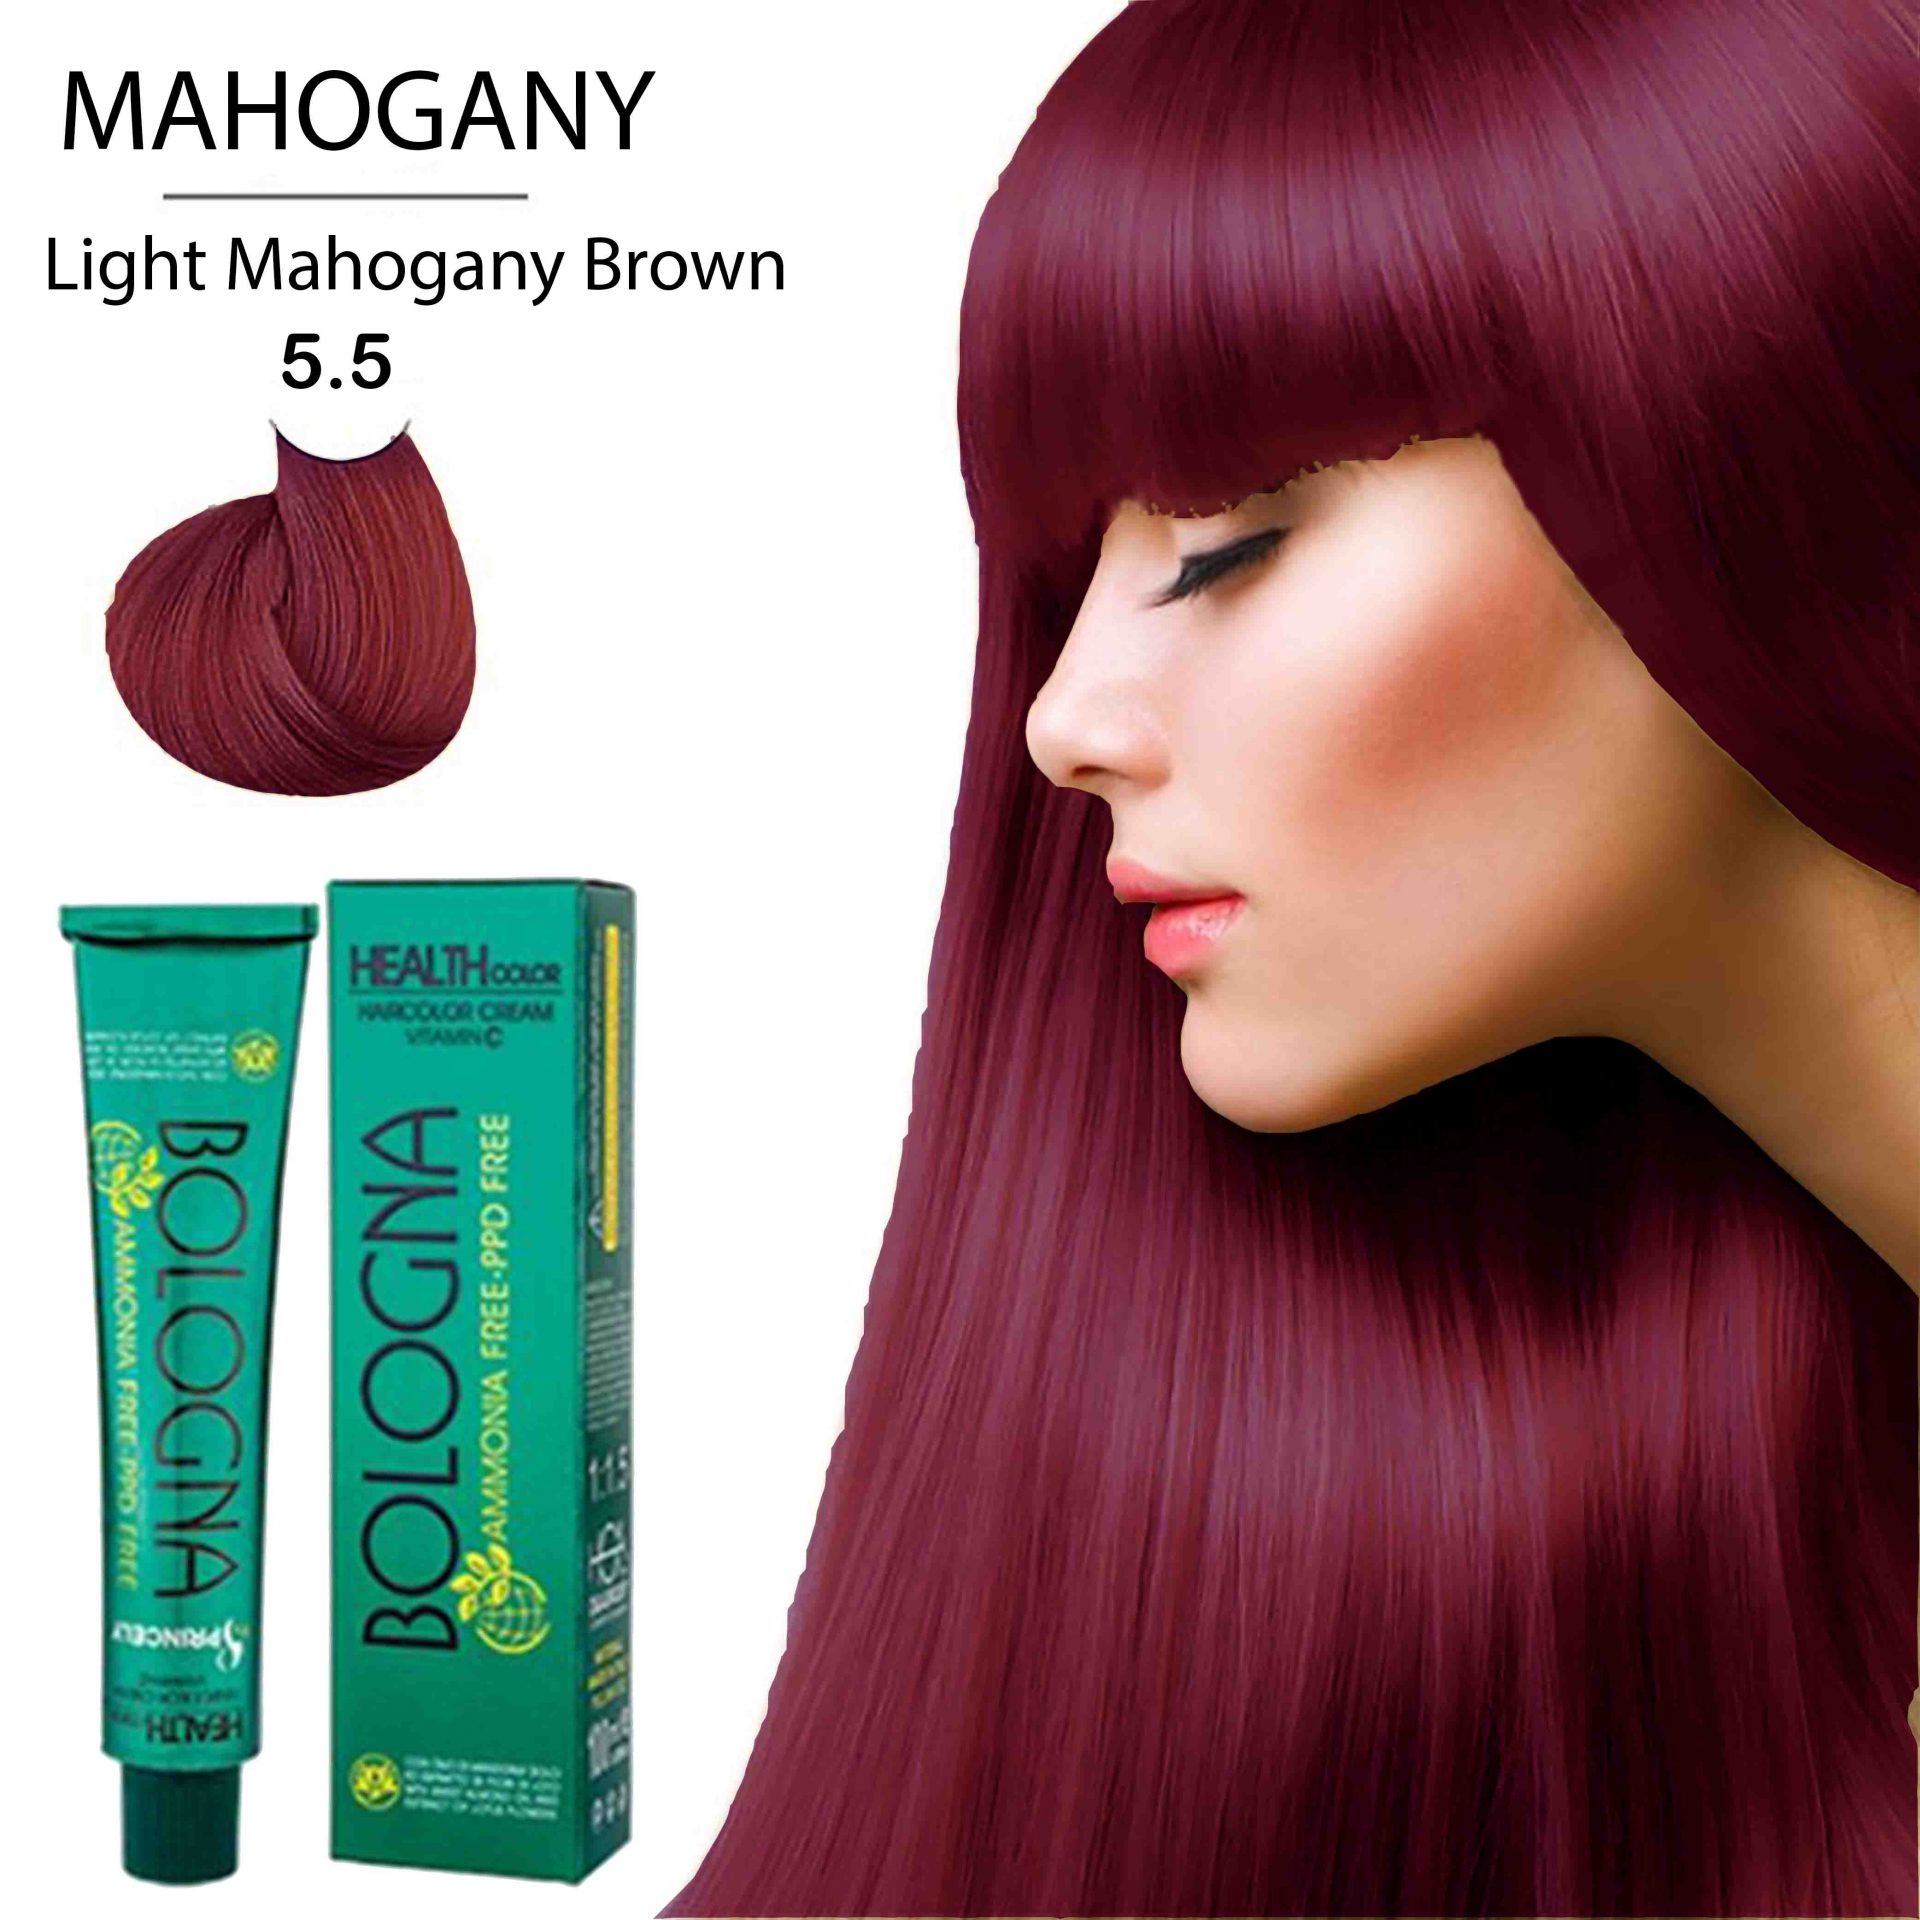 رنگ مو بدون آمونیاک بلونیا 100میل Light Mahogany Brown 5.5